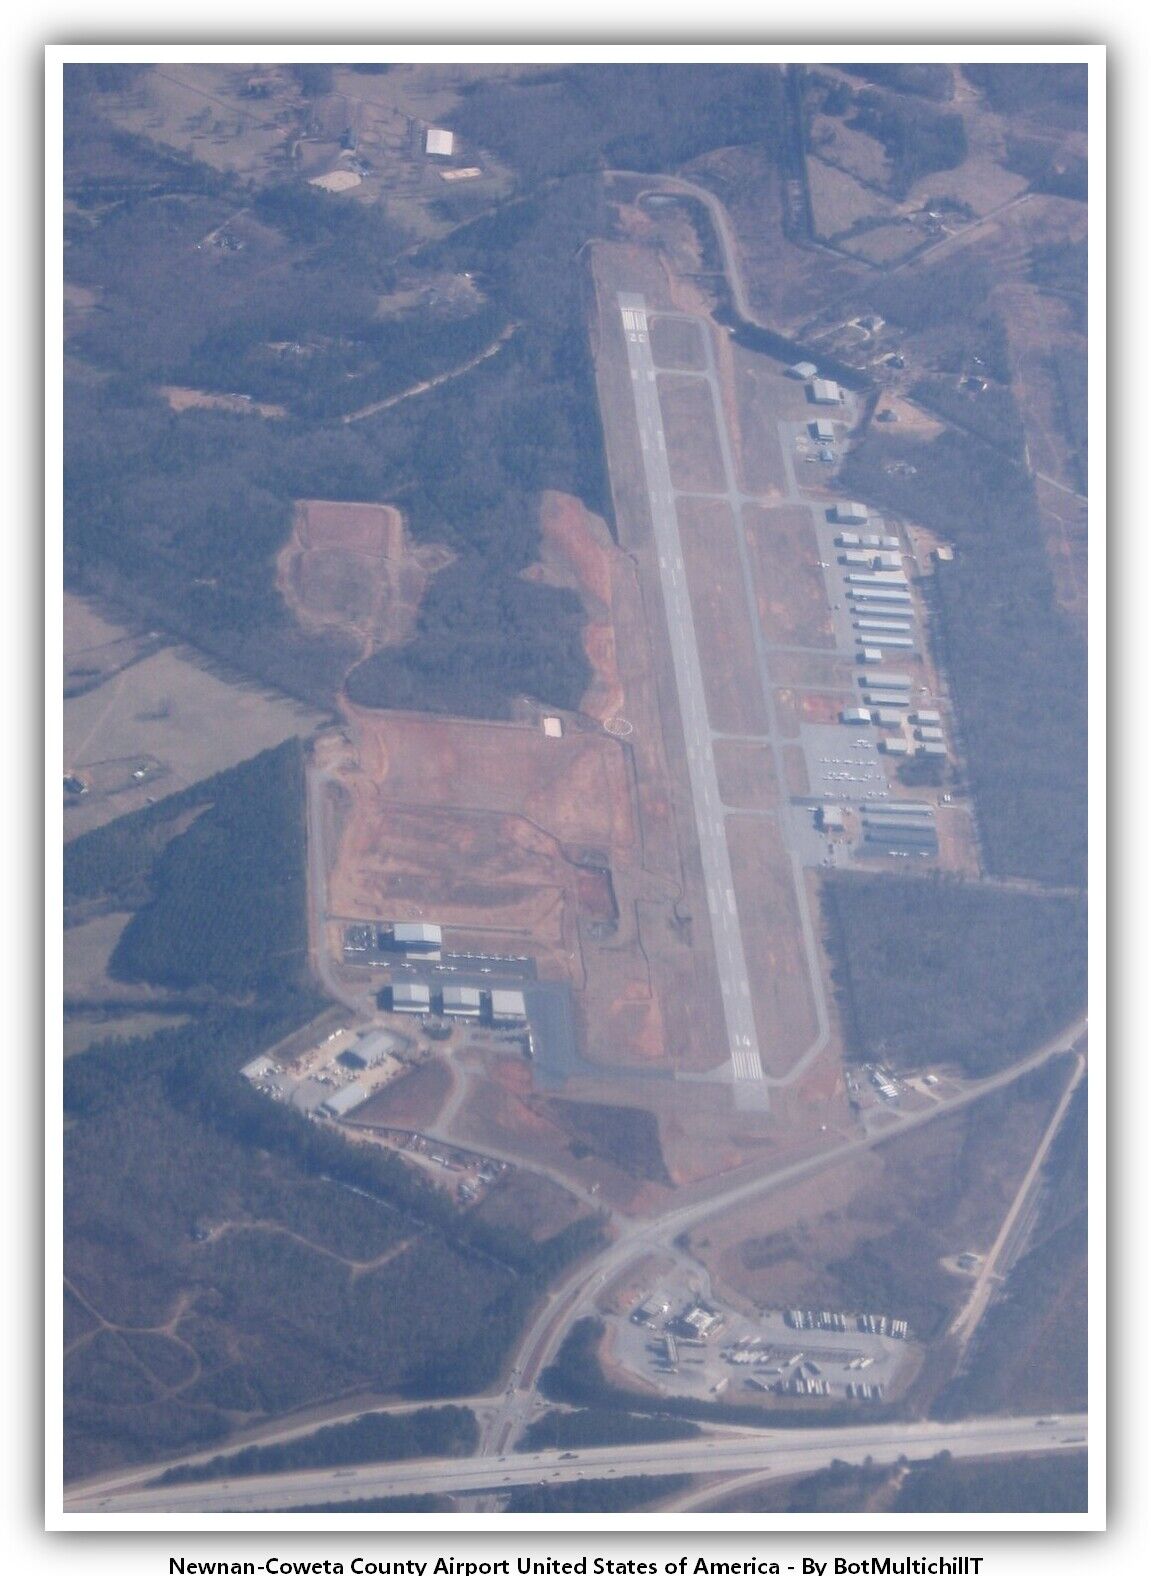 Newnan-Coweta County Airport United States of America Airport Postcard